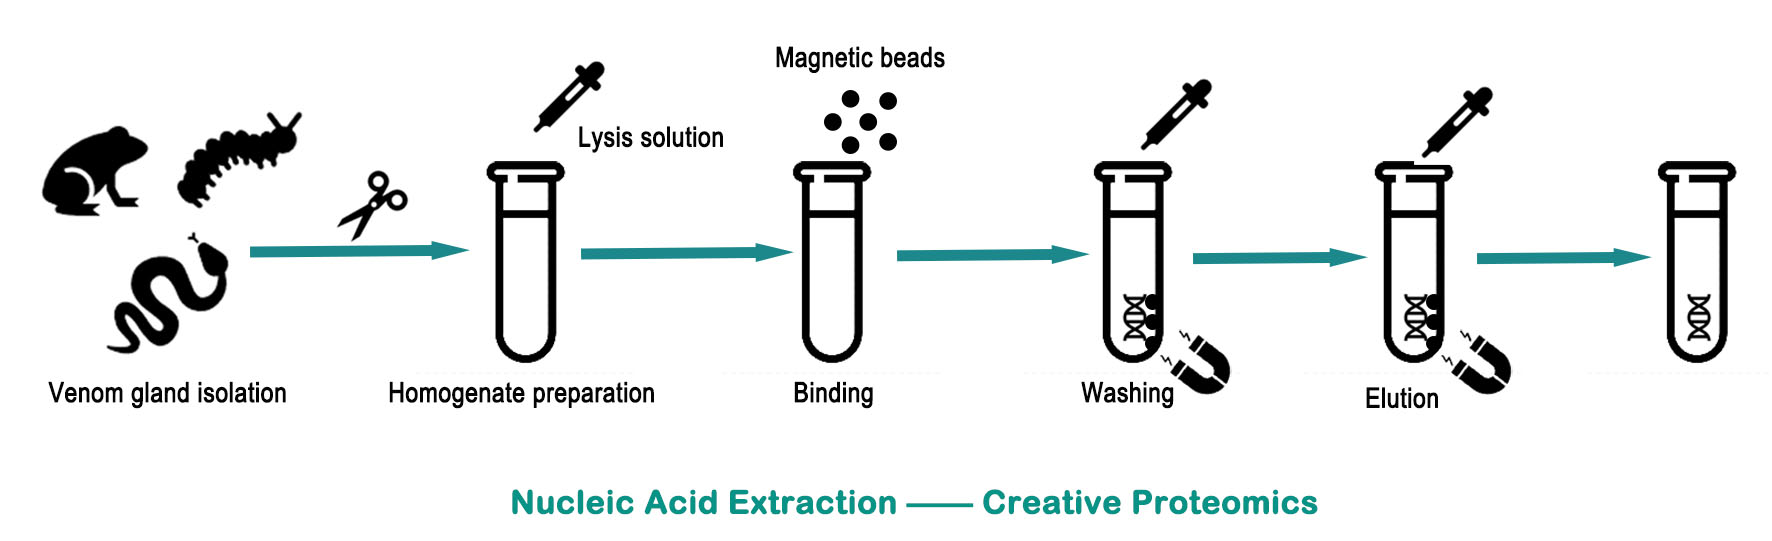 Nucleic Acid Extraction - Creative Proteomics